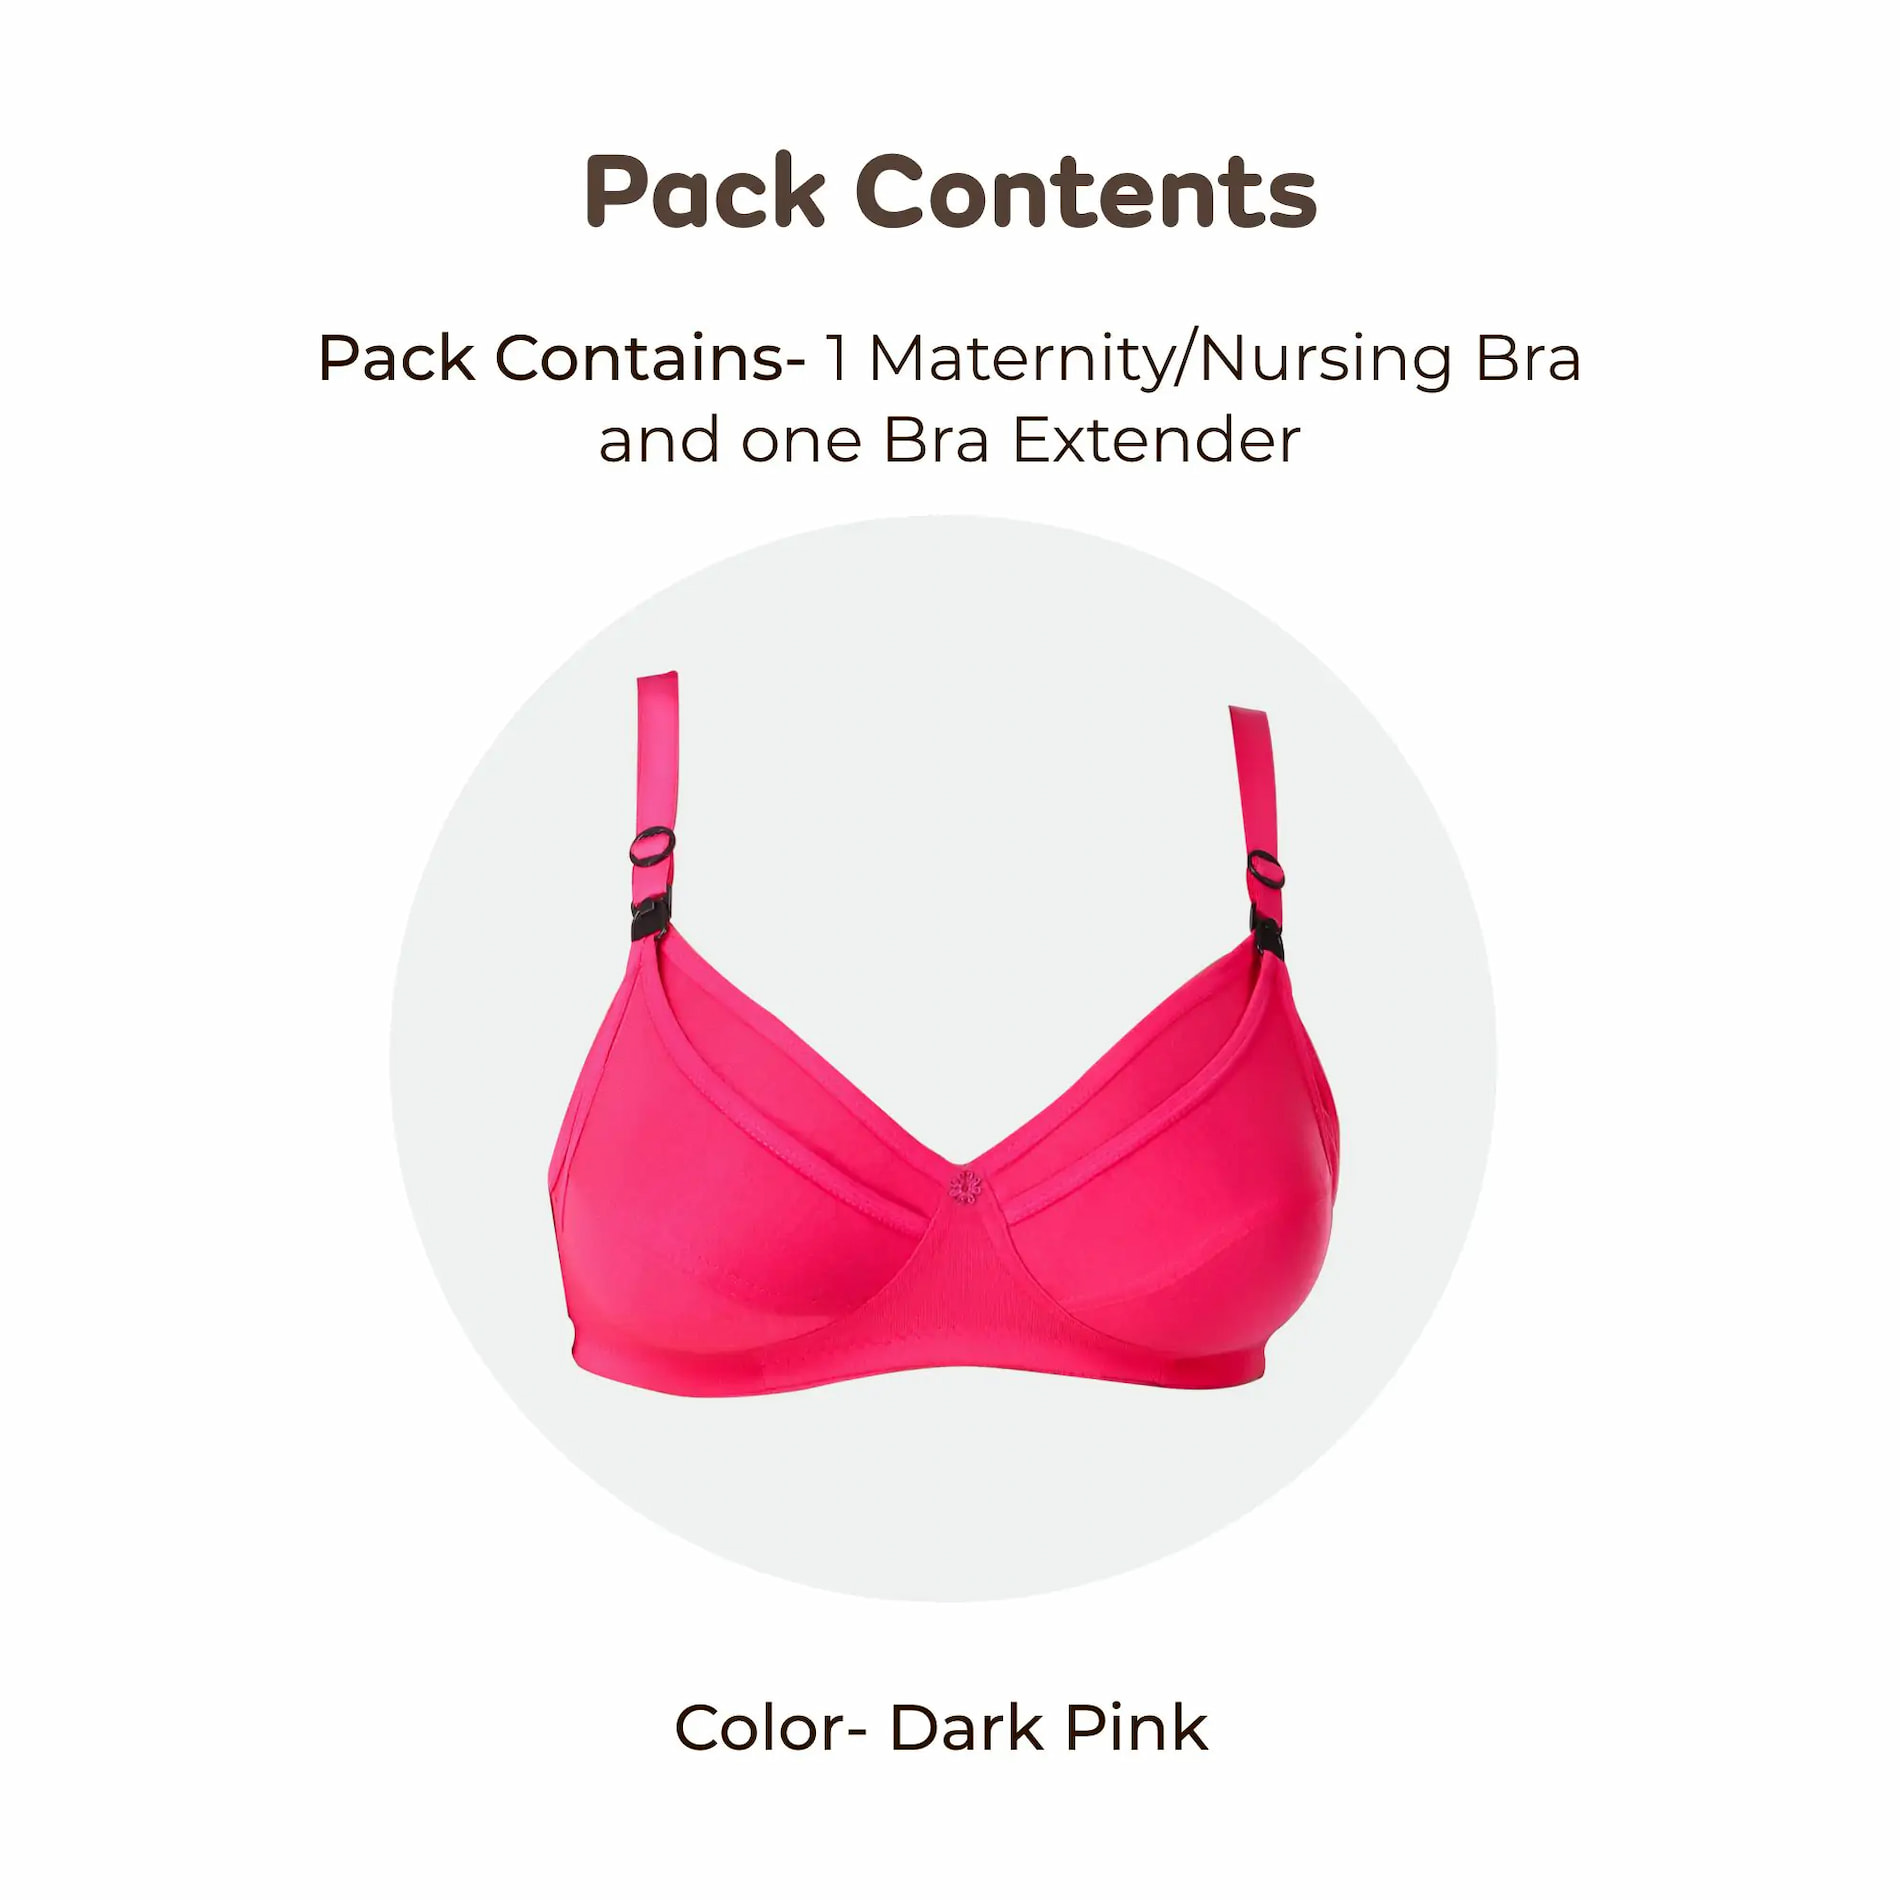 Mylo Maternity/Nursing Bras Non-Wired, Non-Padded with free Bra Extender - Dark Pink 32 B 